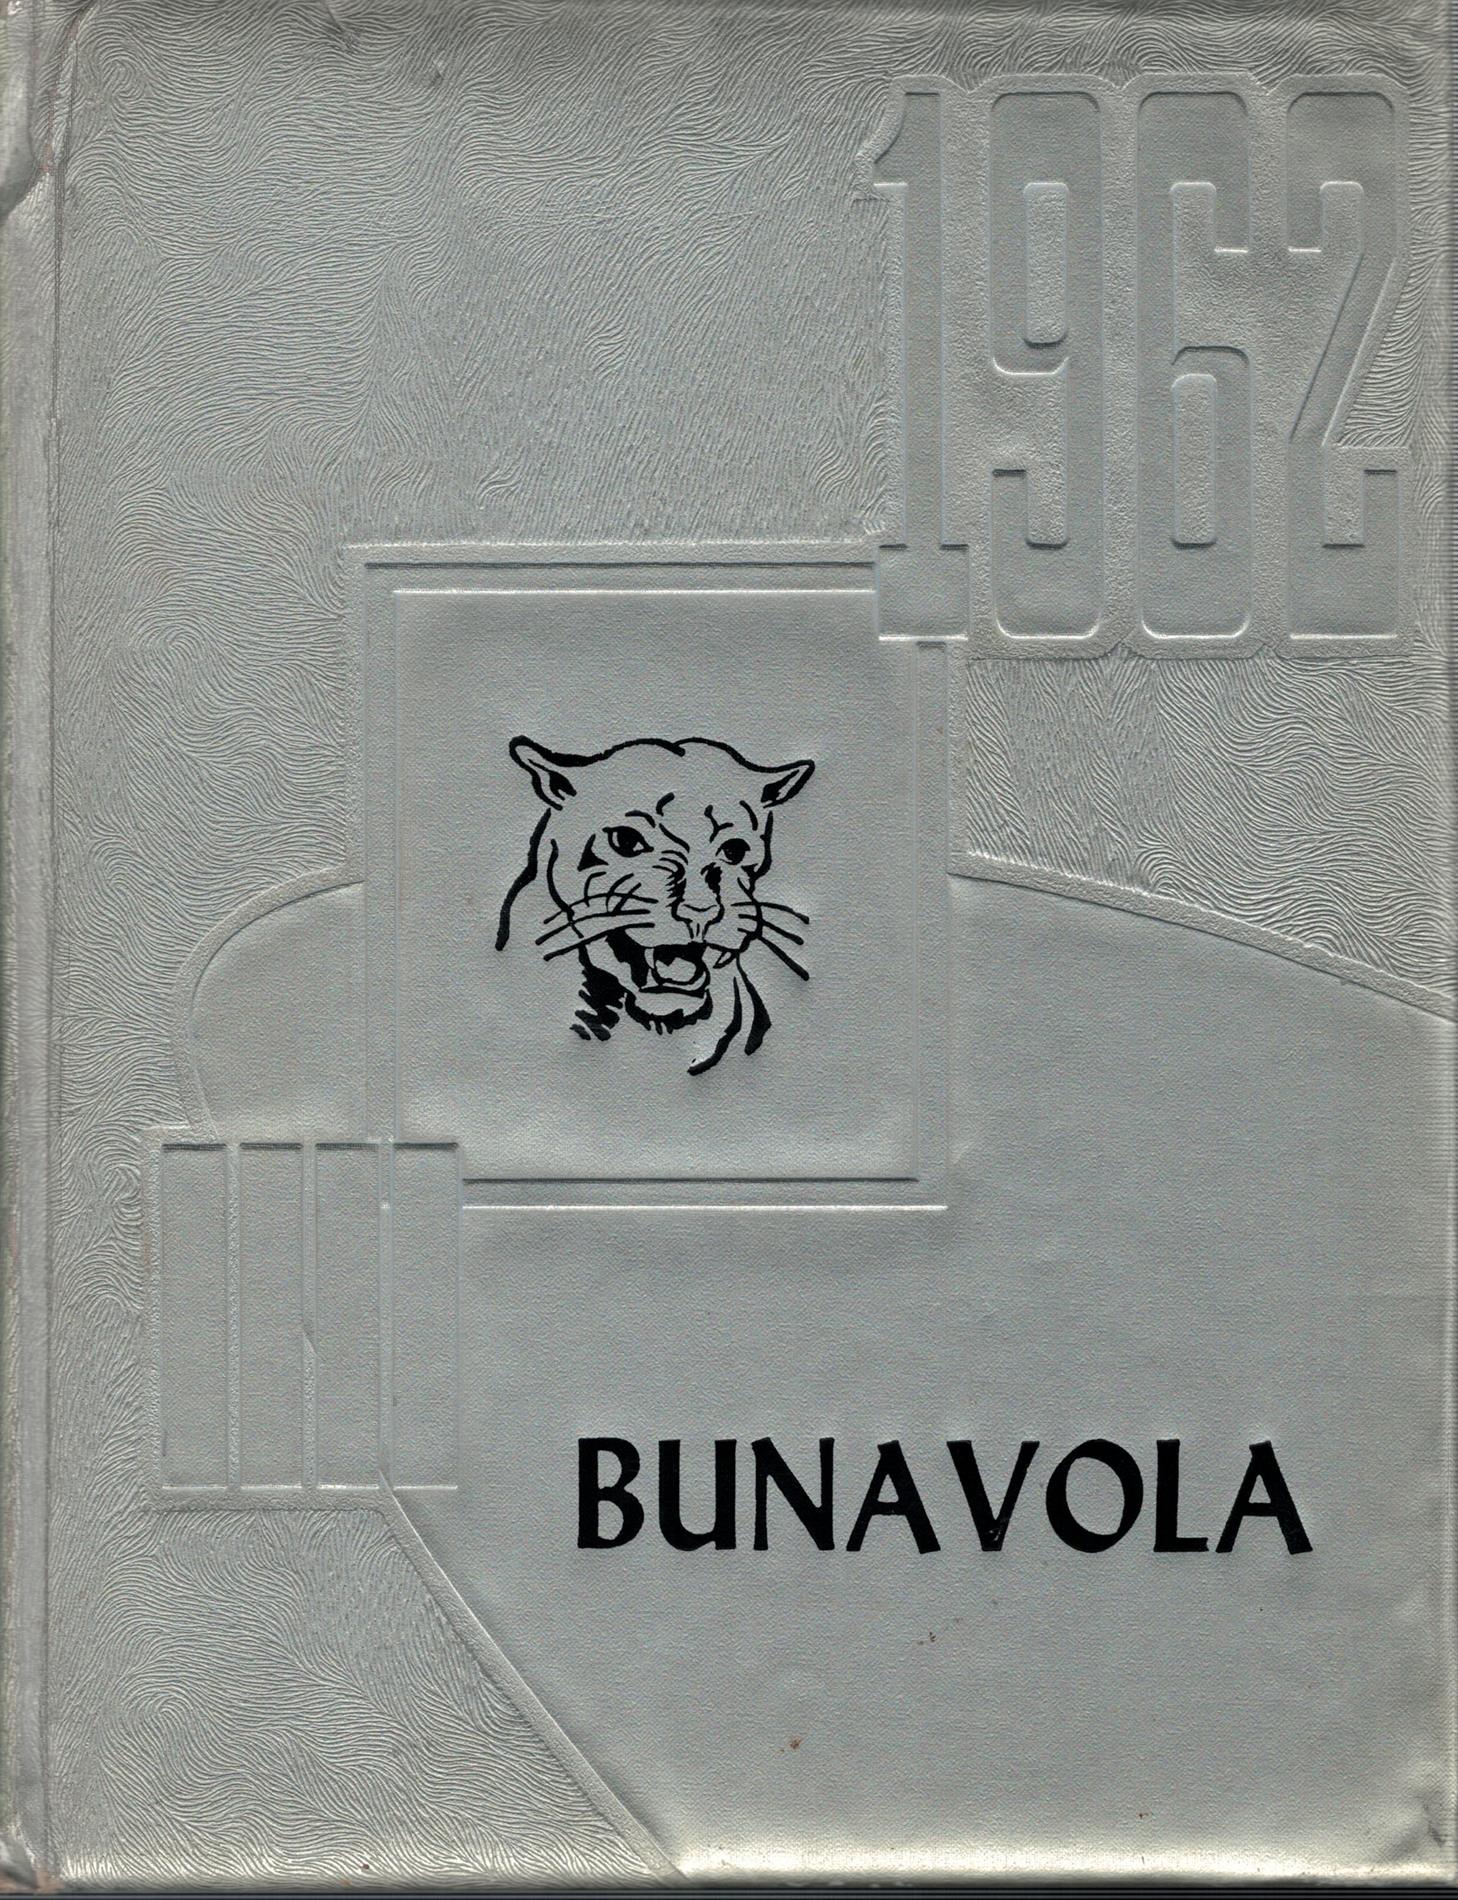 1962 Bunavola